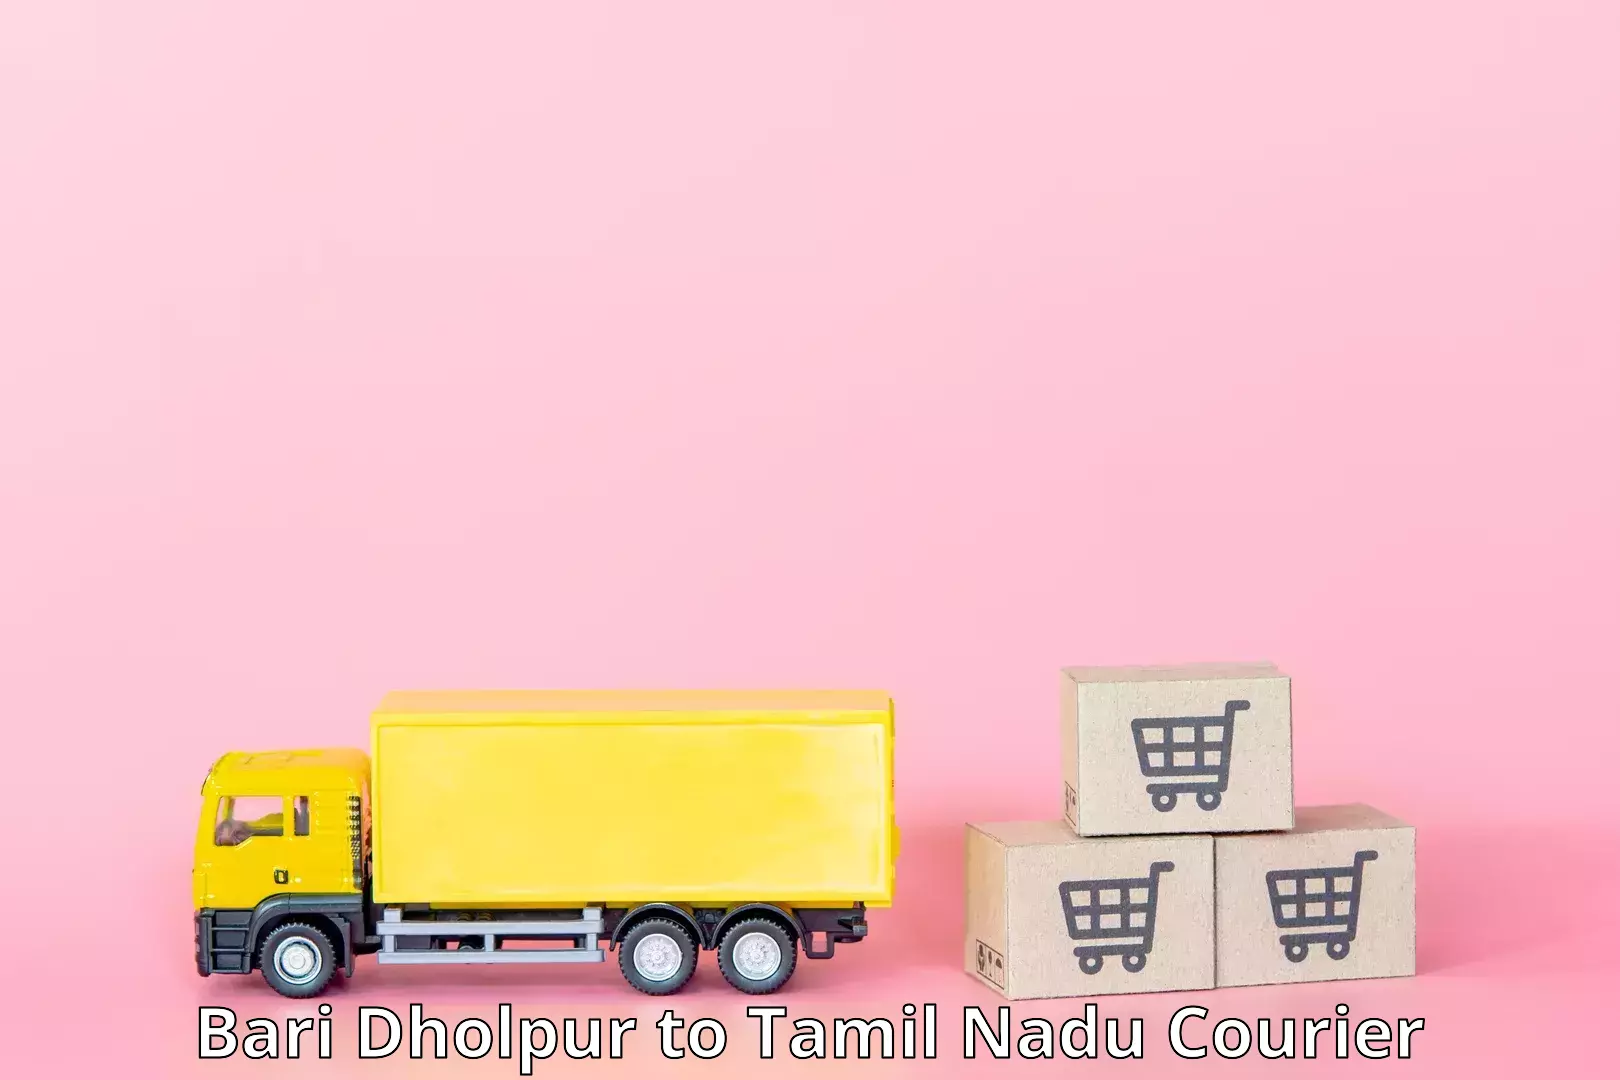 Professional courier handling Bari Dholpur to Thisayanvilai